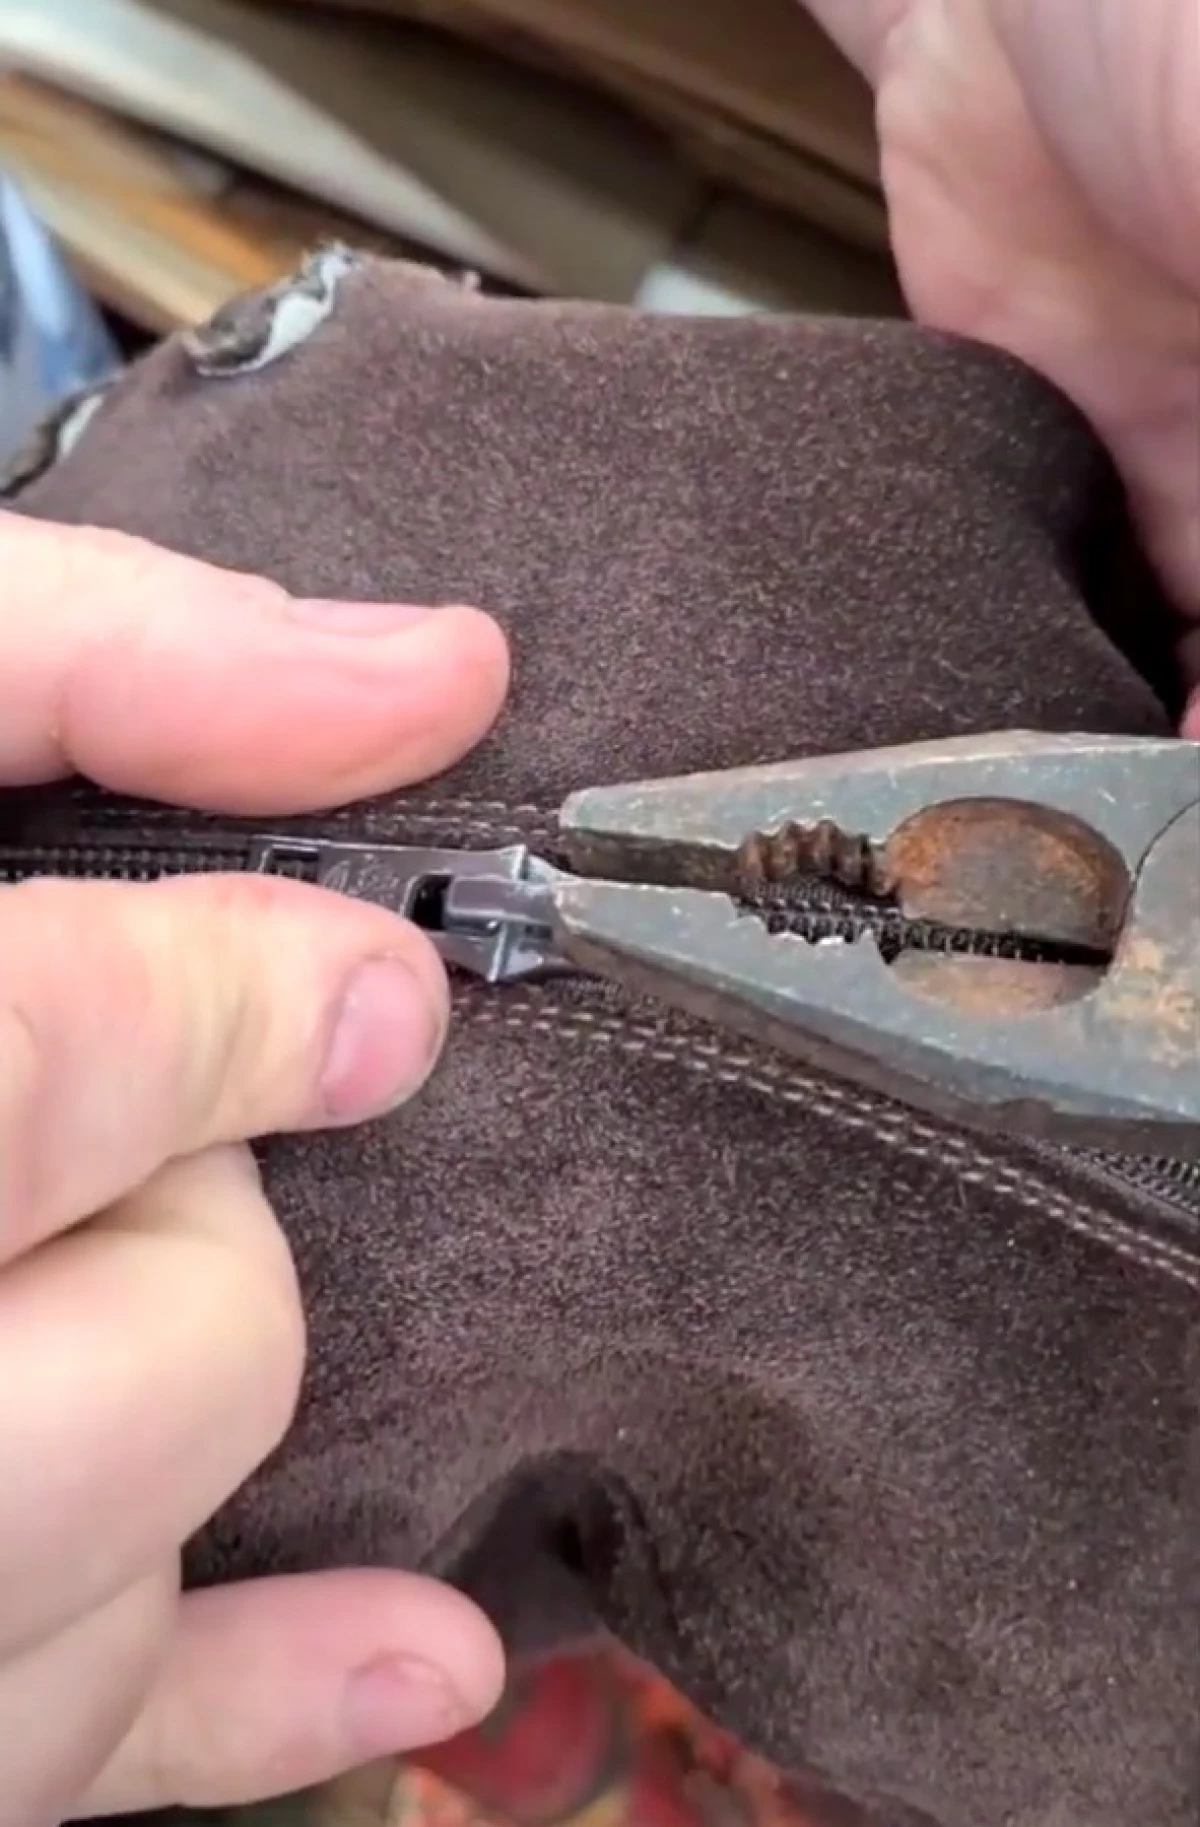 Shoemaker သည်မတူကွဲပြားသော zipper ကိုမည်သို့ဖြေရှင်းရမည်ကိုပြသခဲ့သည်။ ၎င်းသည်ပုံရသည်ထက်ပိုမိုလွယ်ကူသည် 545_5